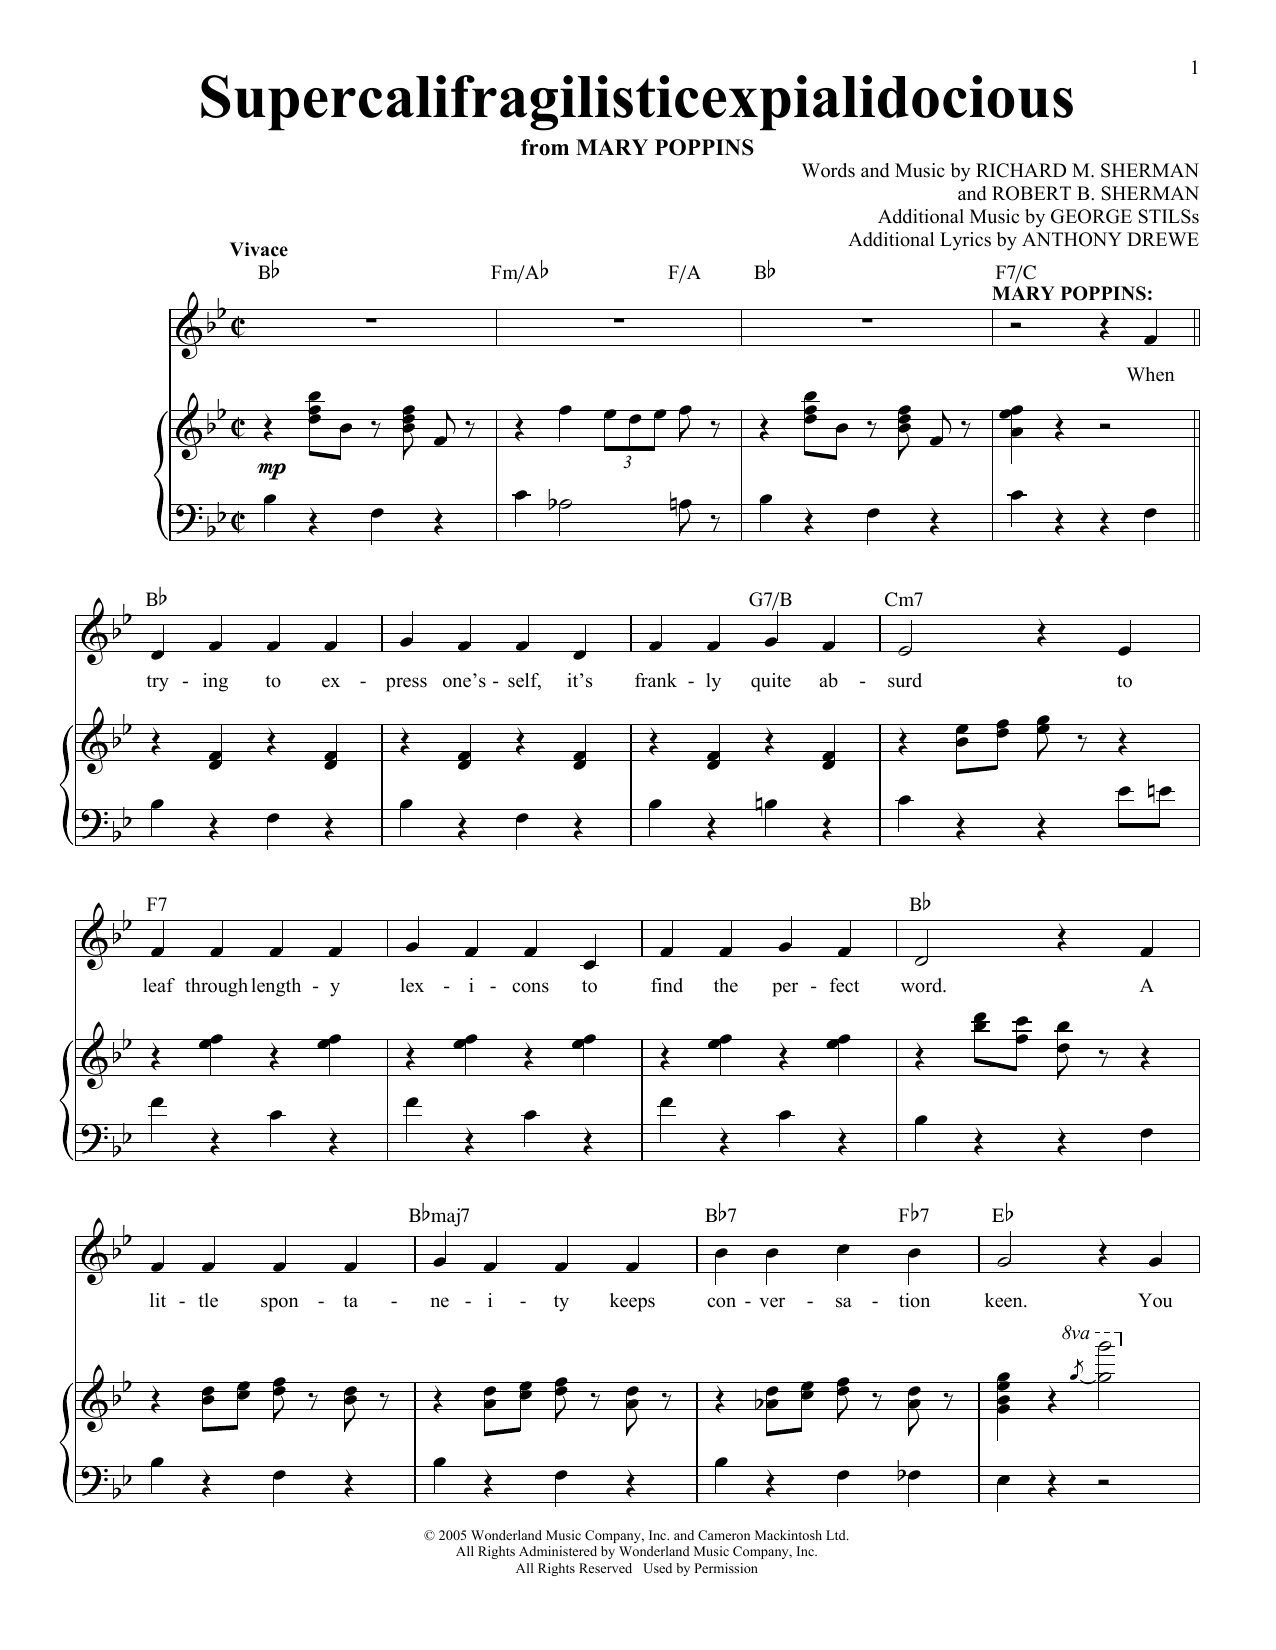 Richard & Robert Sherman Supercalifragilisticexpialidocious Sheet Music Notes & Chords for Piano & Vocal - Download or Print PDF